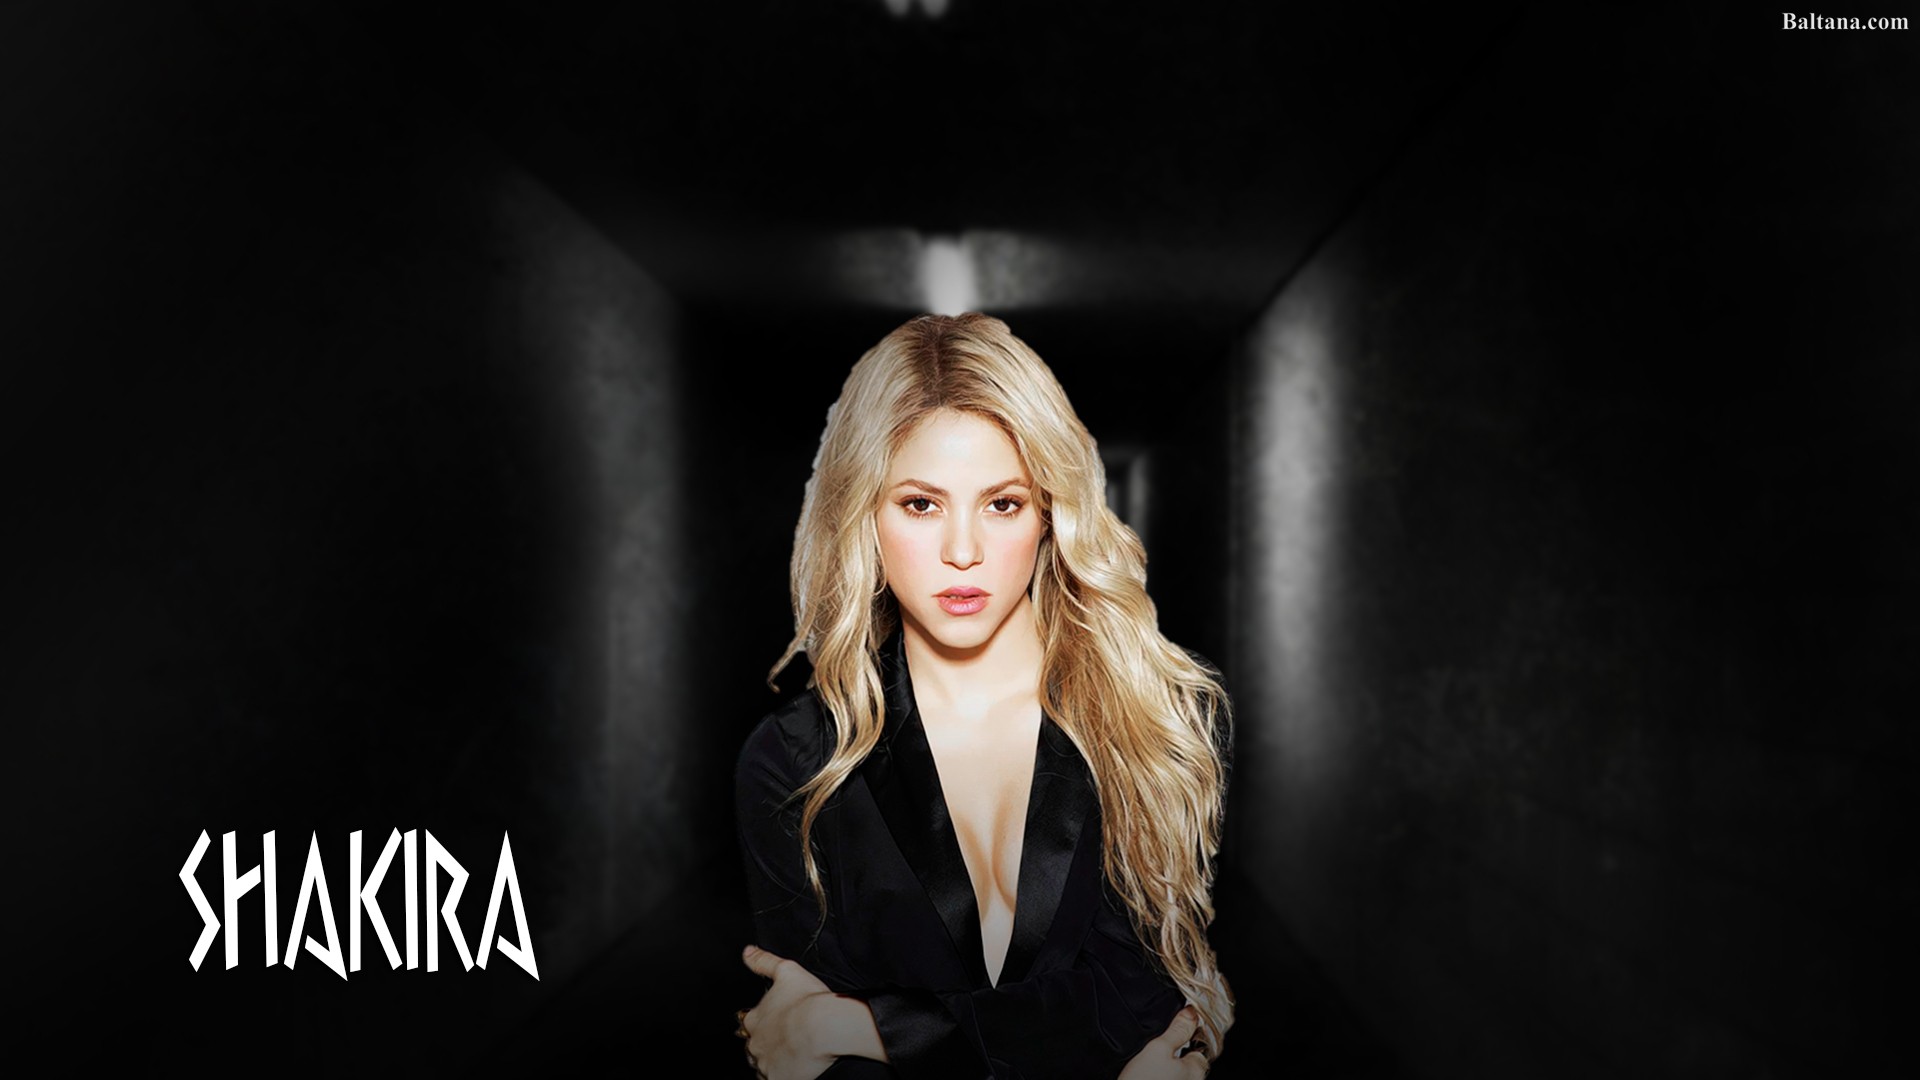 Shakira Wallpaper HD Background Image Pics Photos